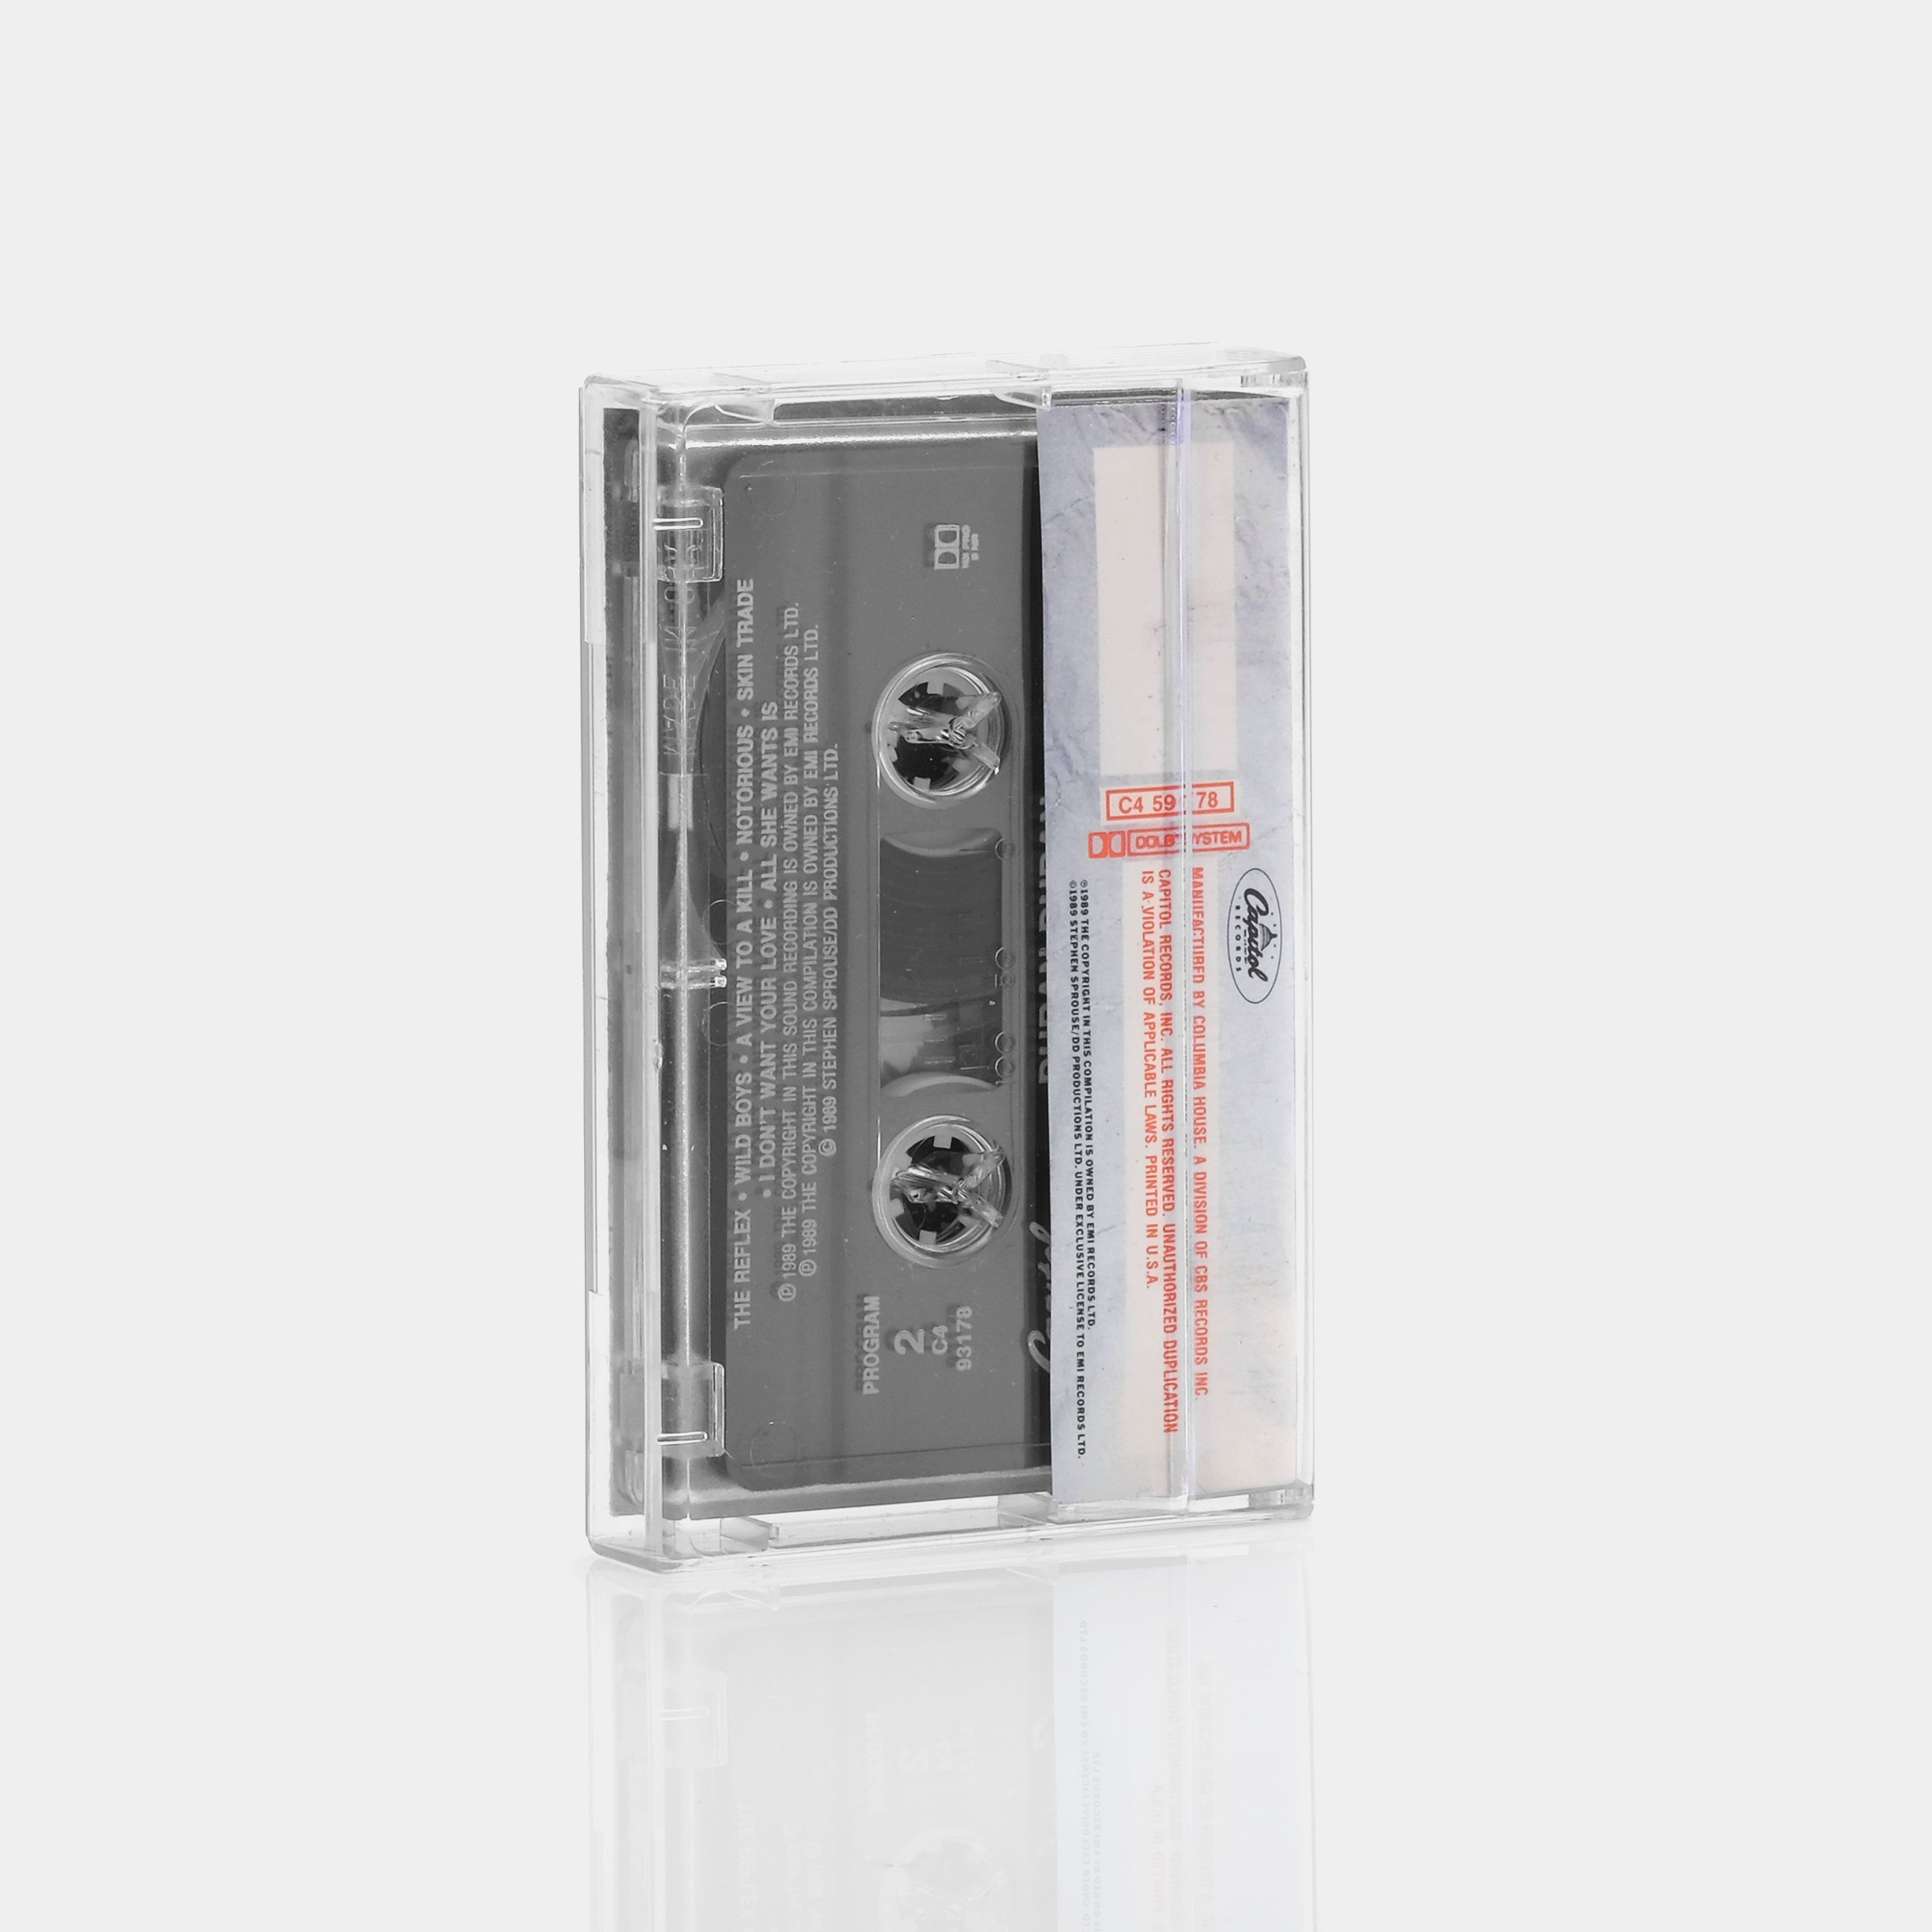 Duran Duran - Decade Cassette Tape